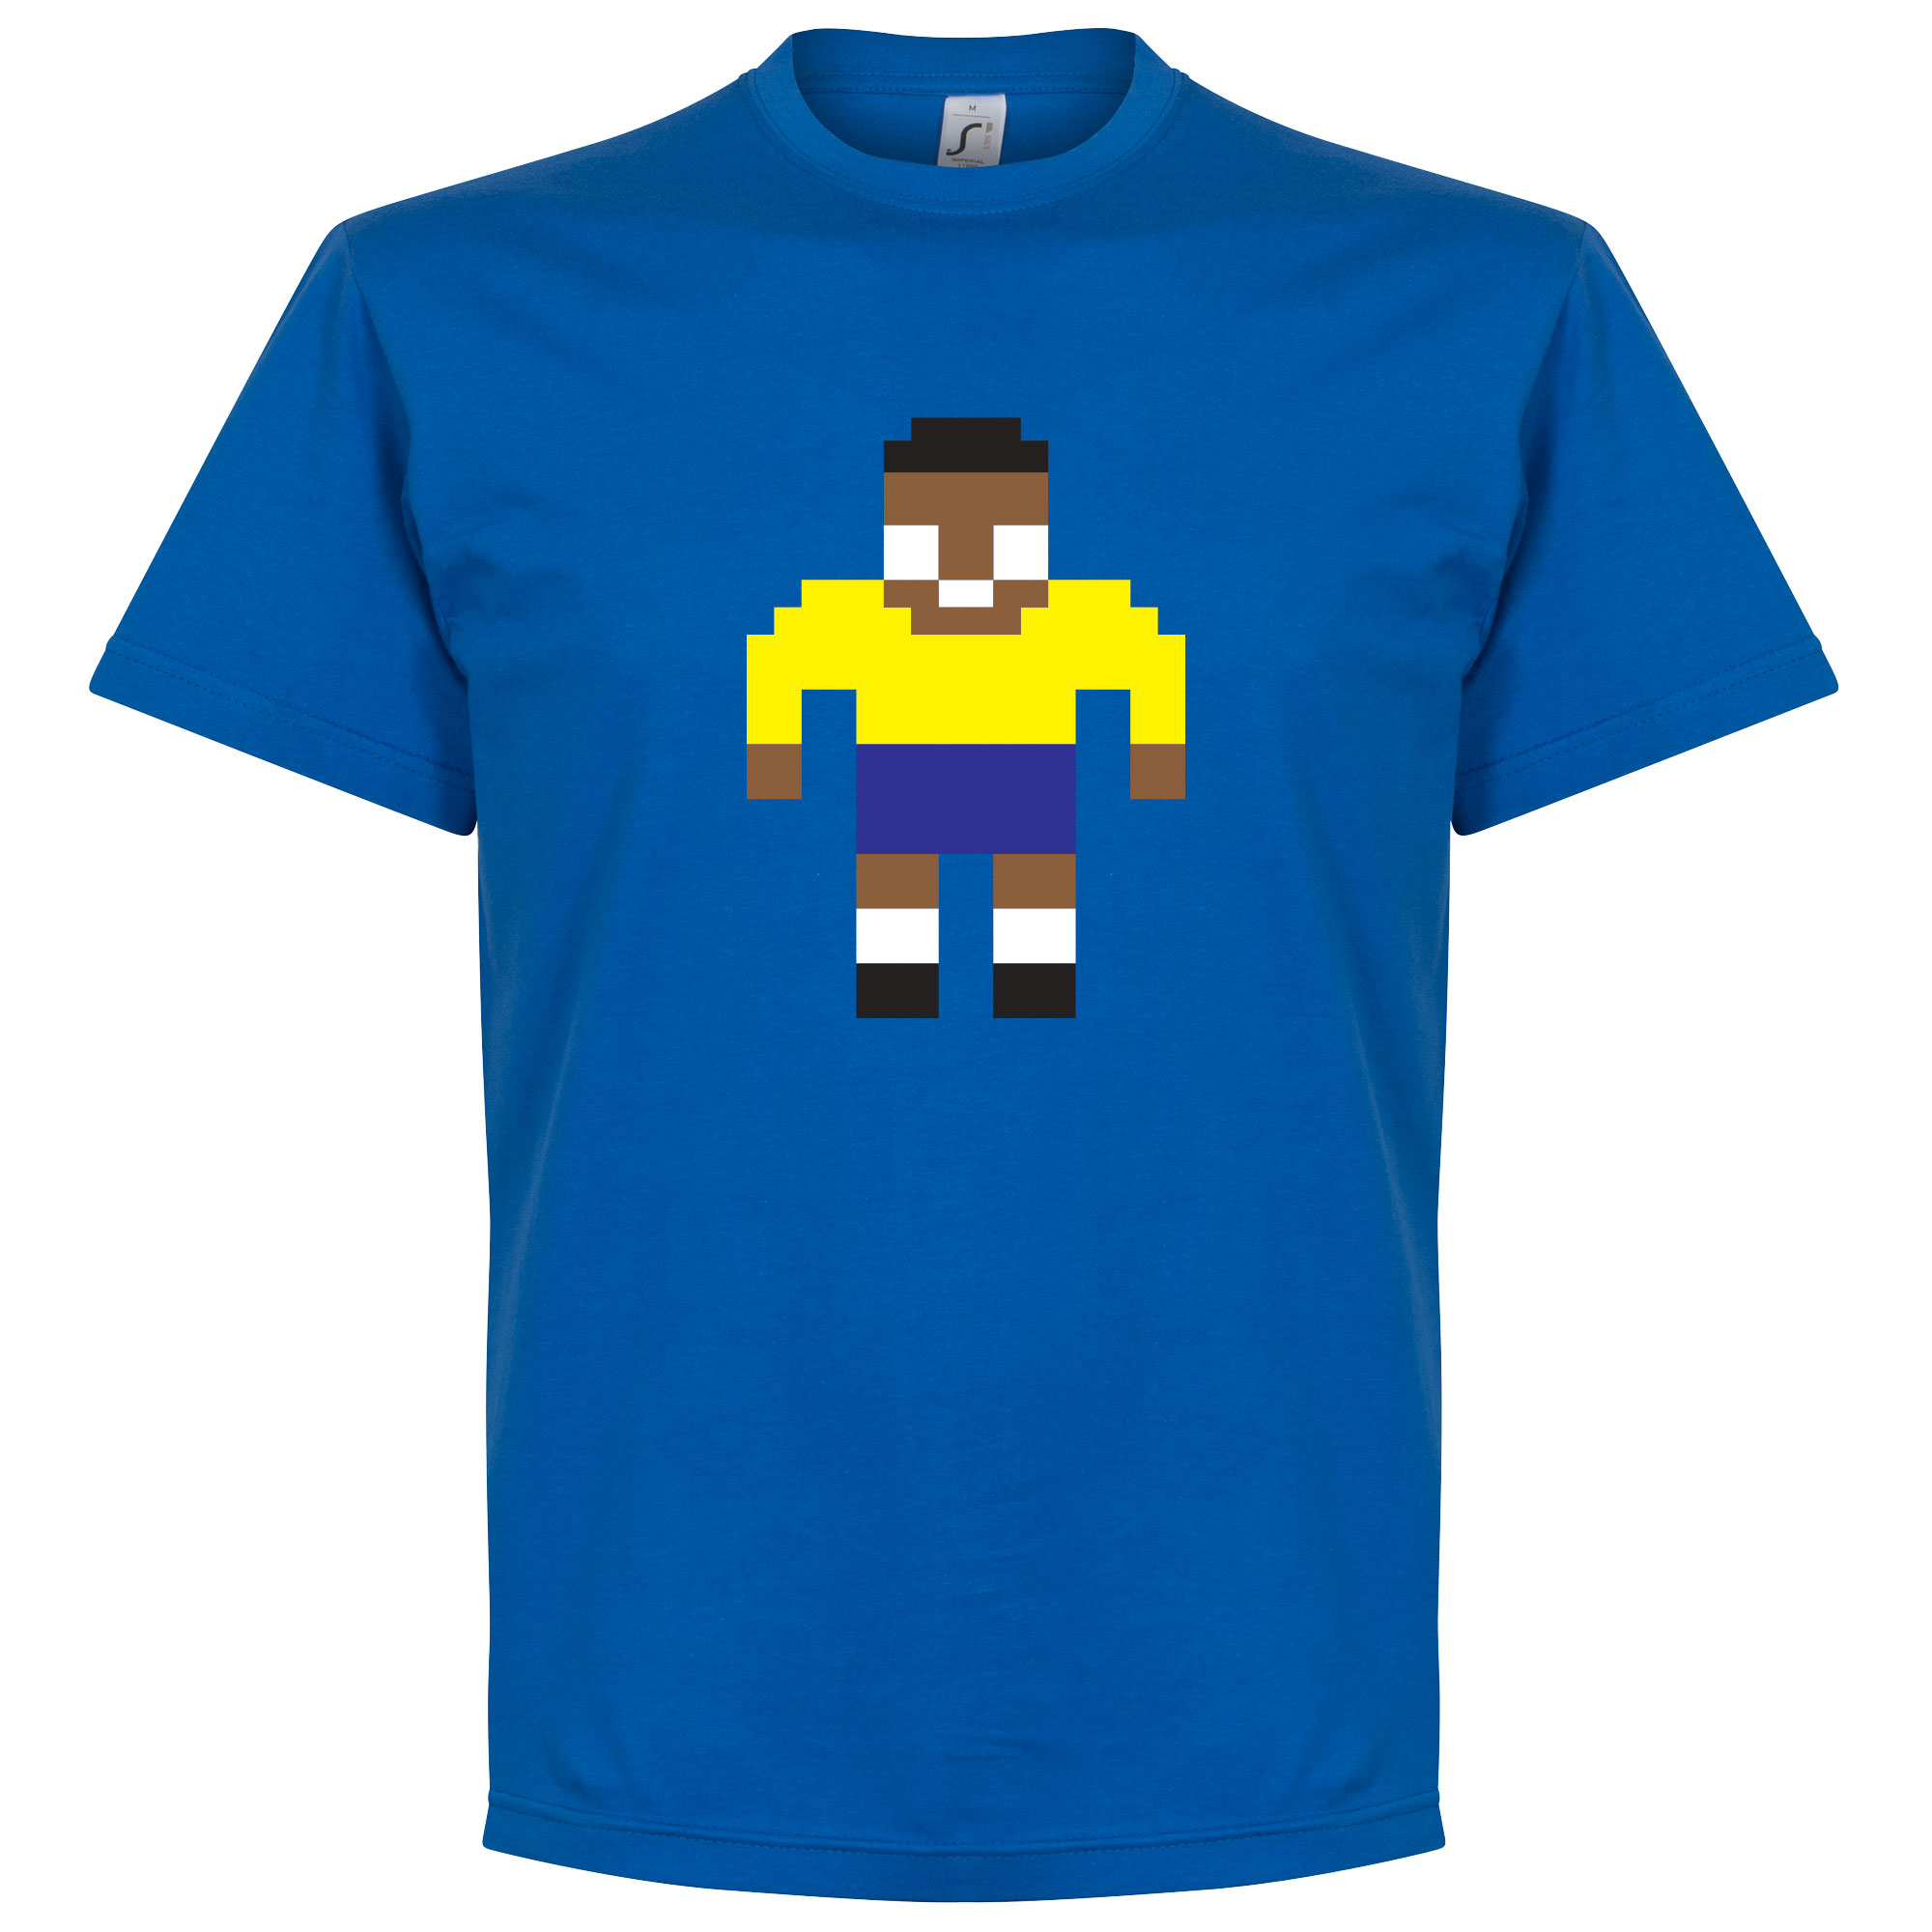 Pele Legend T-Shirt S